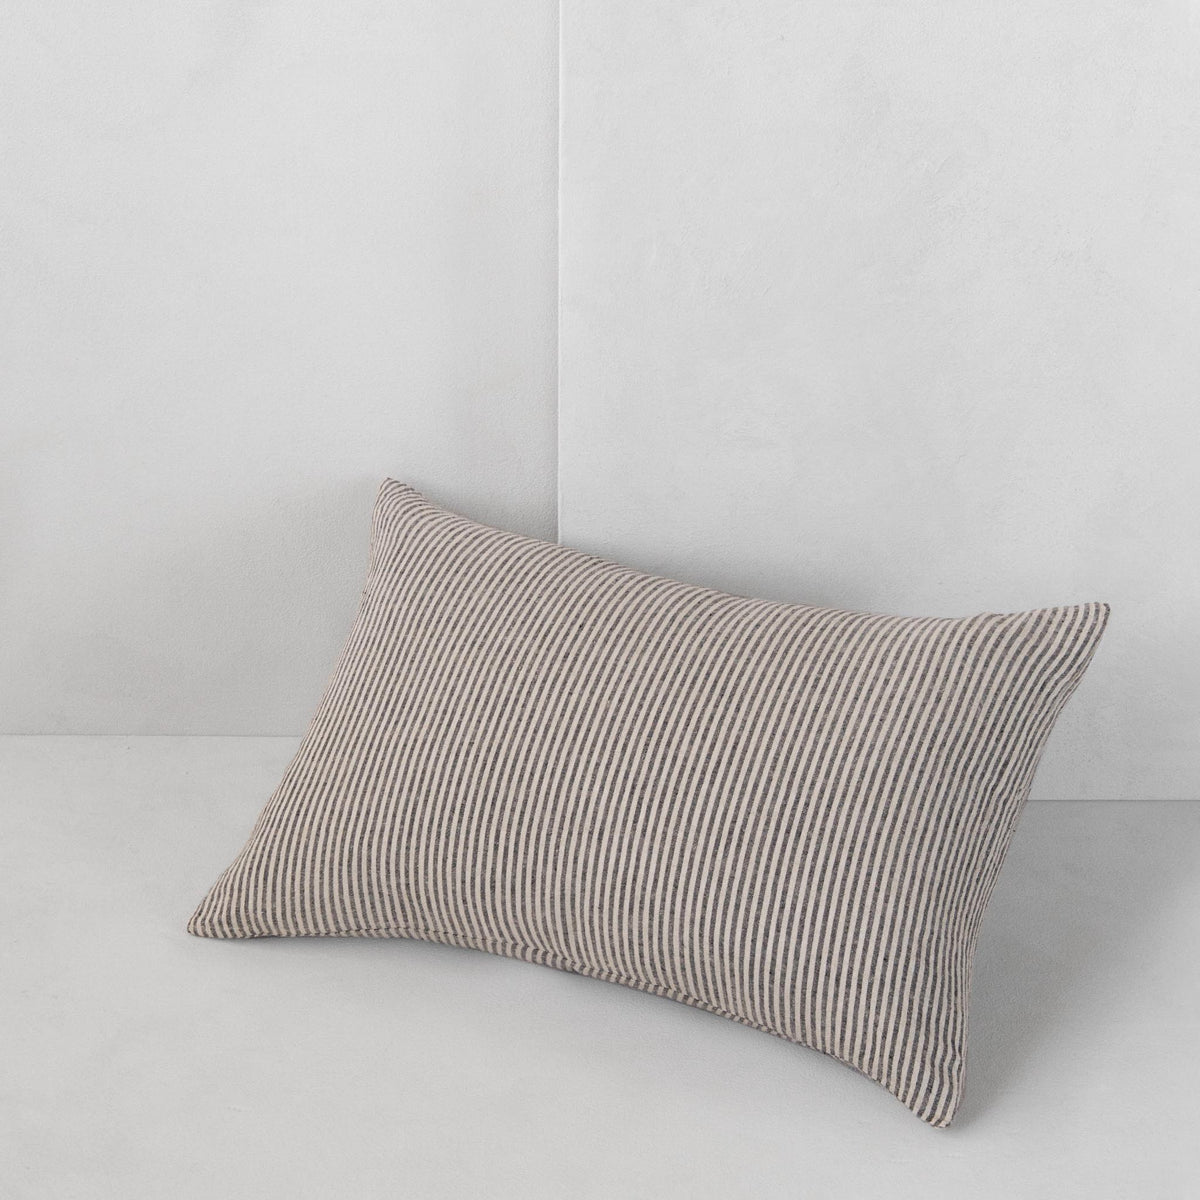 Basix Stripe Linen Pillow - Nox/Sable